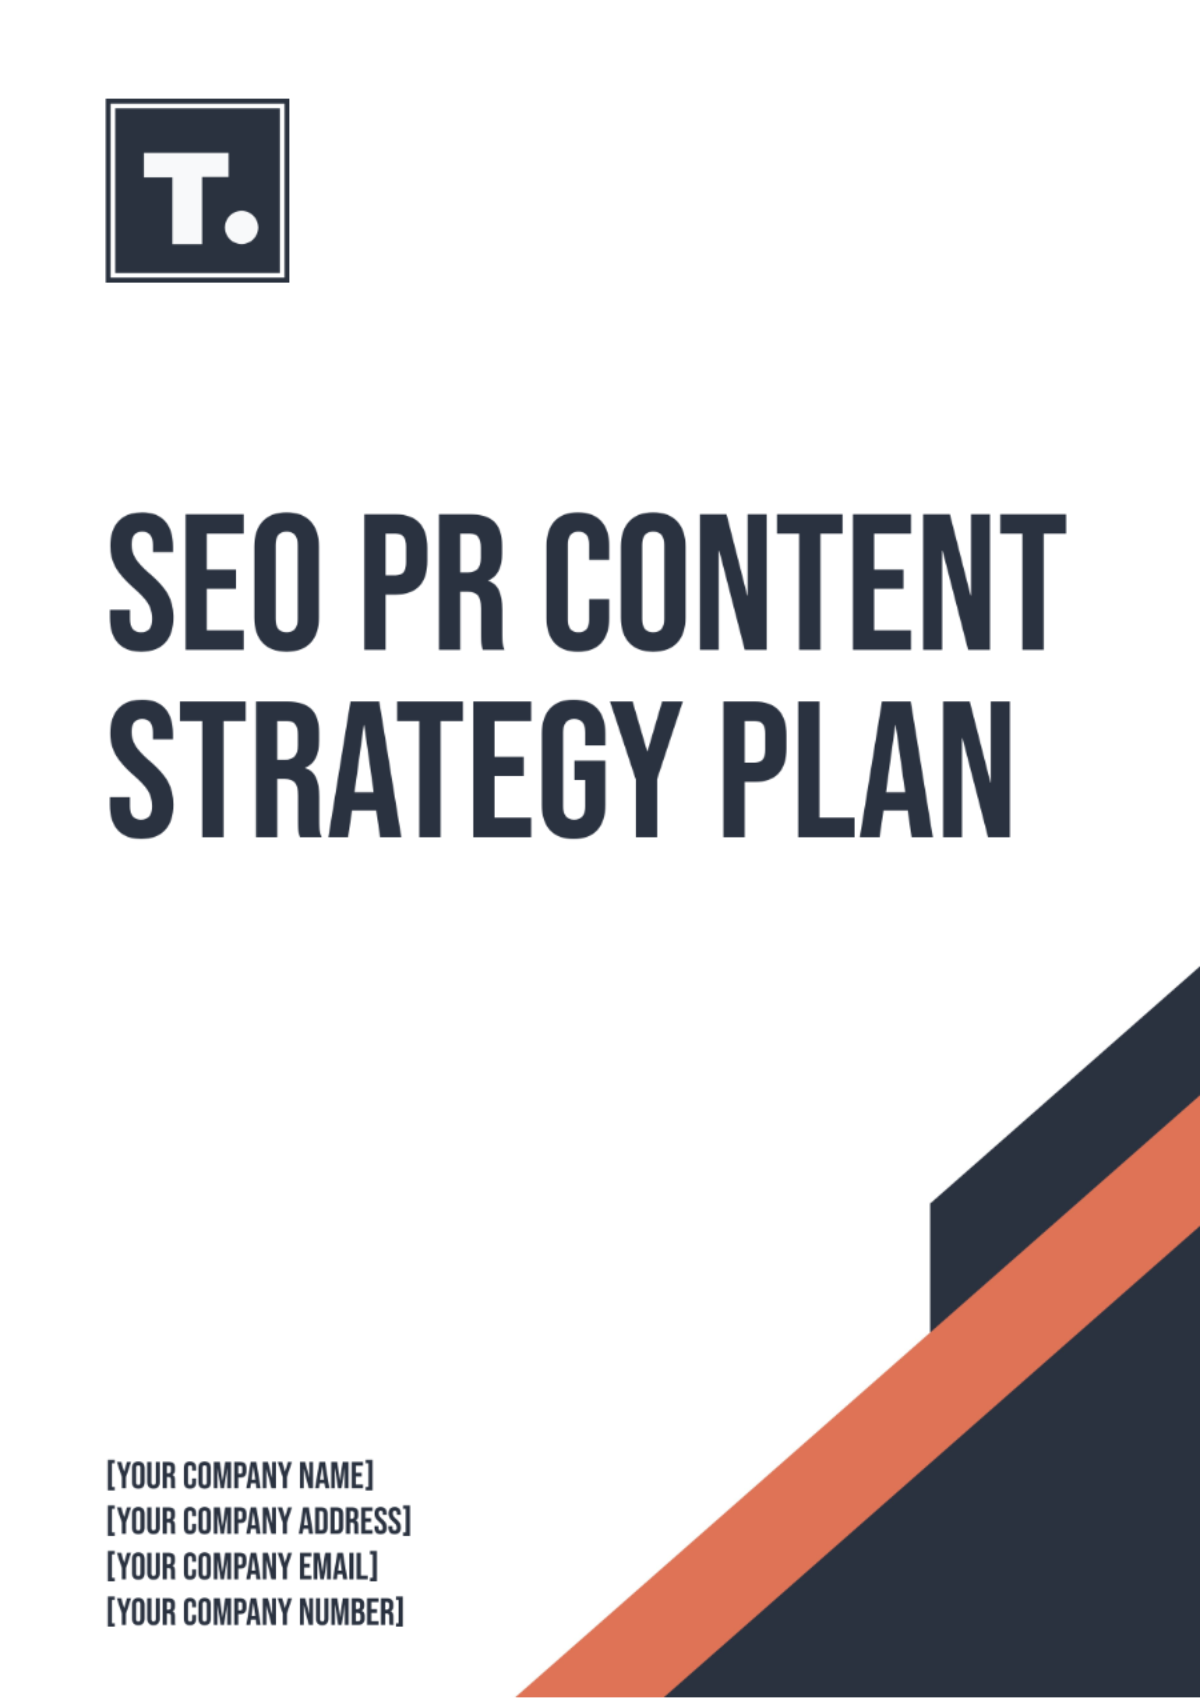 SEO PR Content Strategy Plan Template